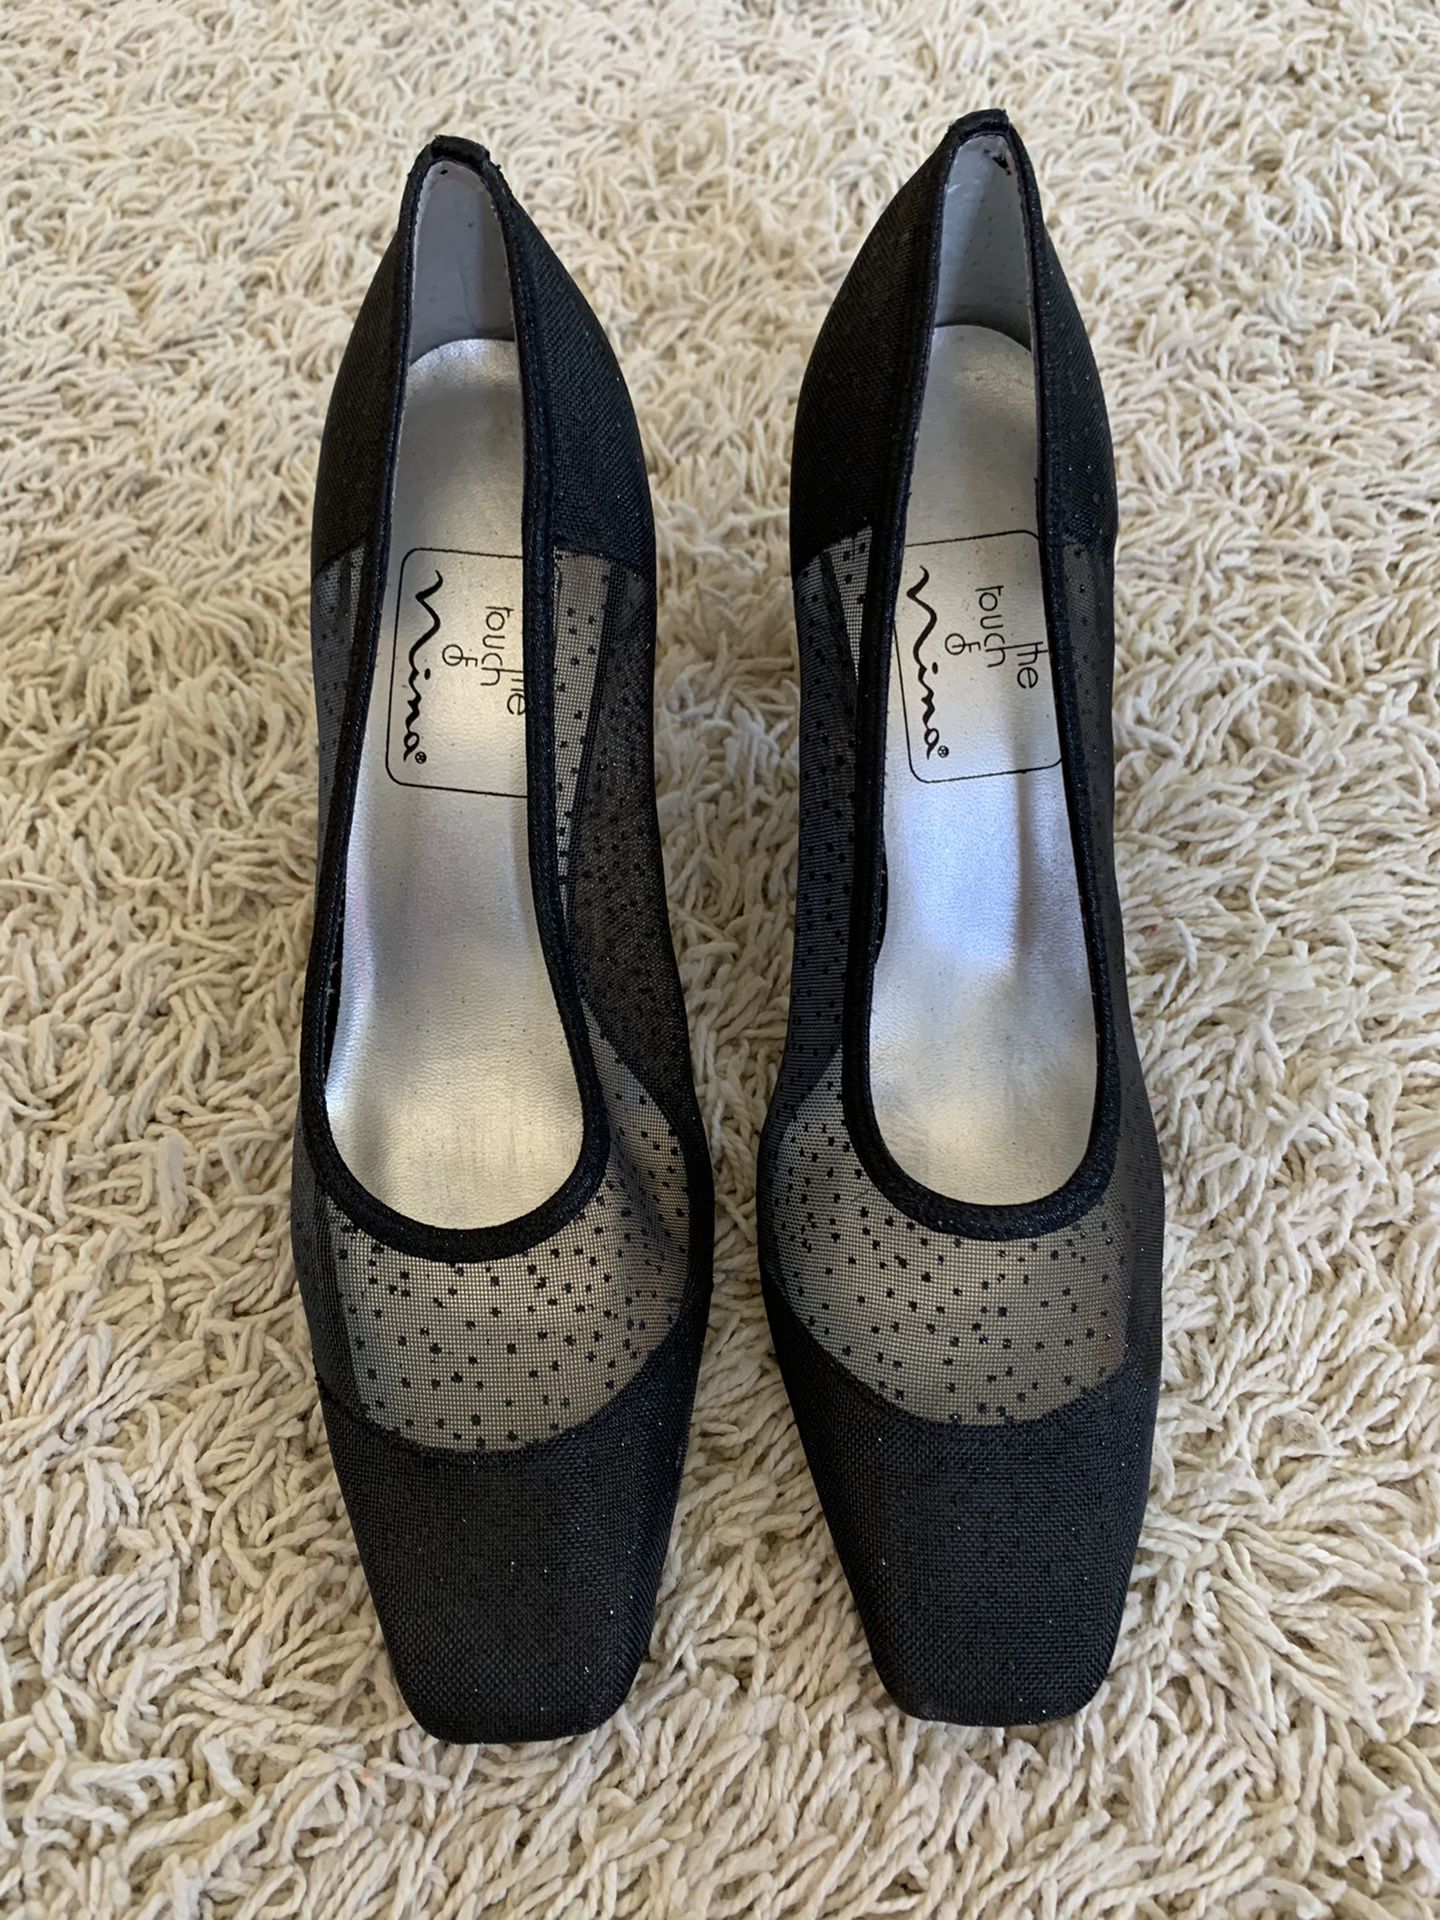 Black heels -7.5